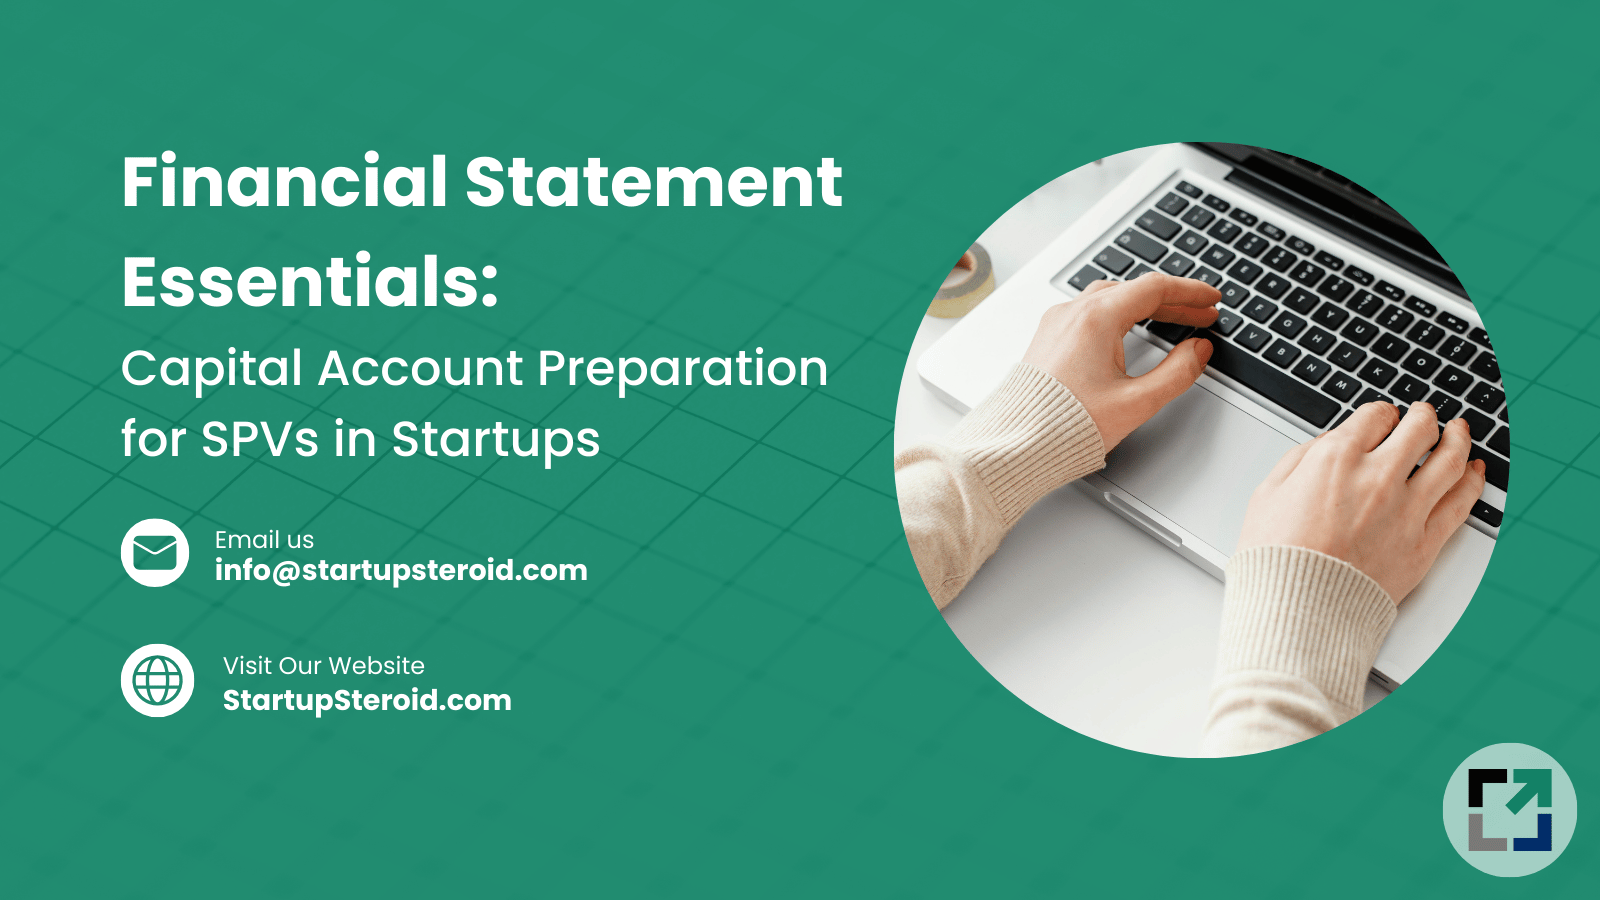 Financial Statement Essentials: Capital Account Preparation for SPVs in Startups